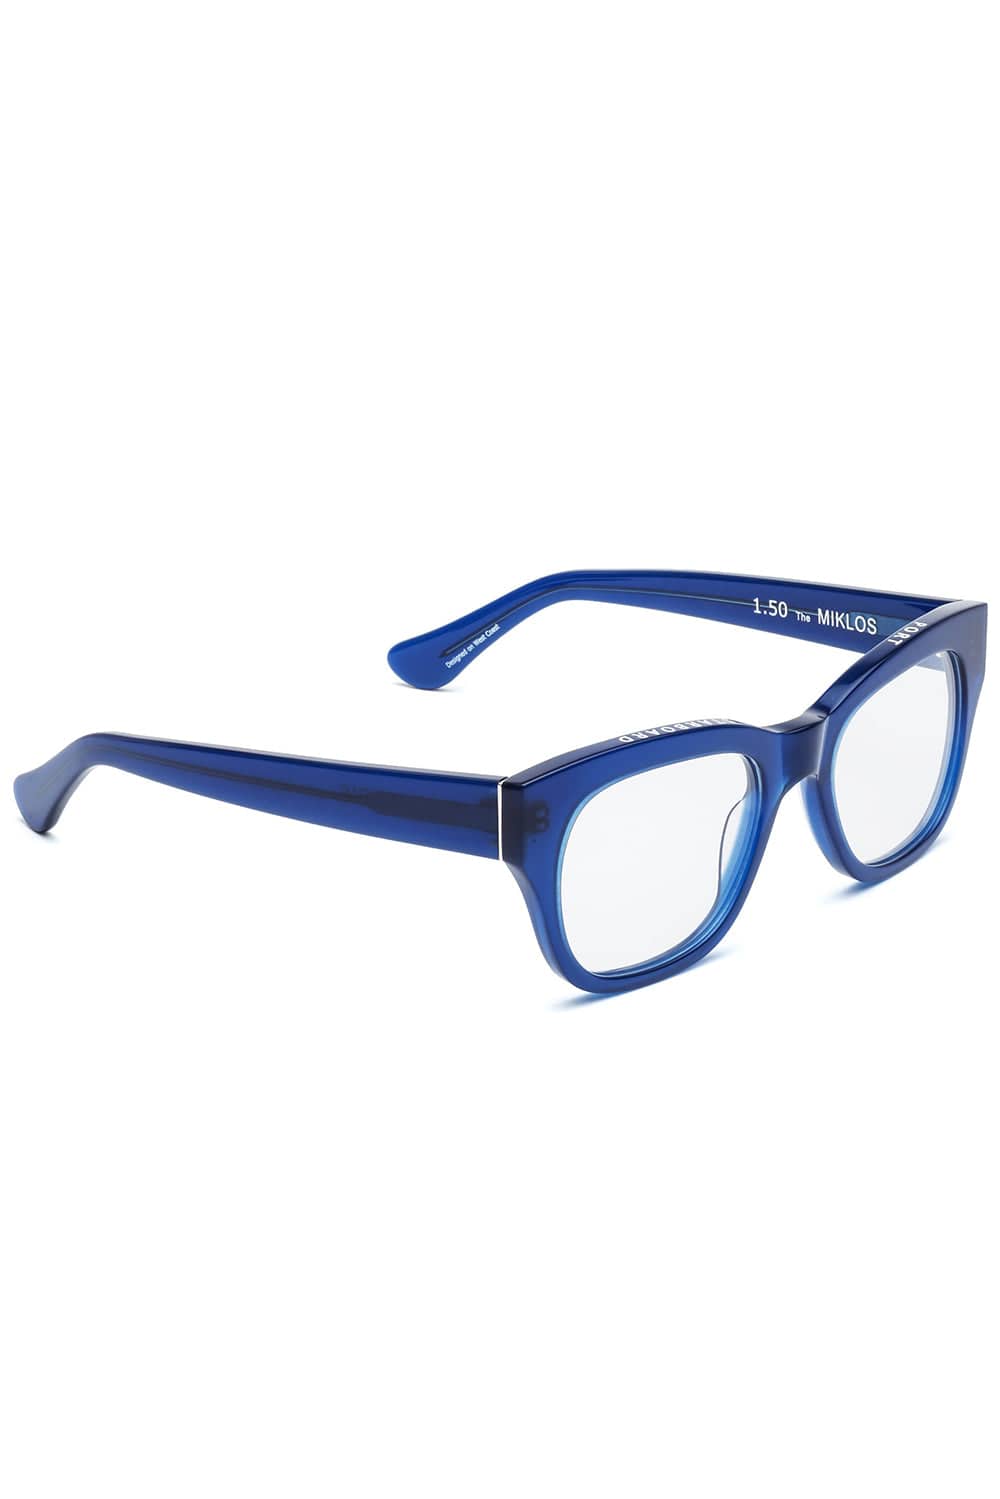 CADDIS-Miklos Progressive Glasses - Blue-BLUE